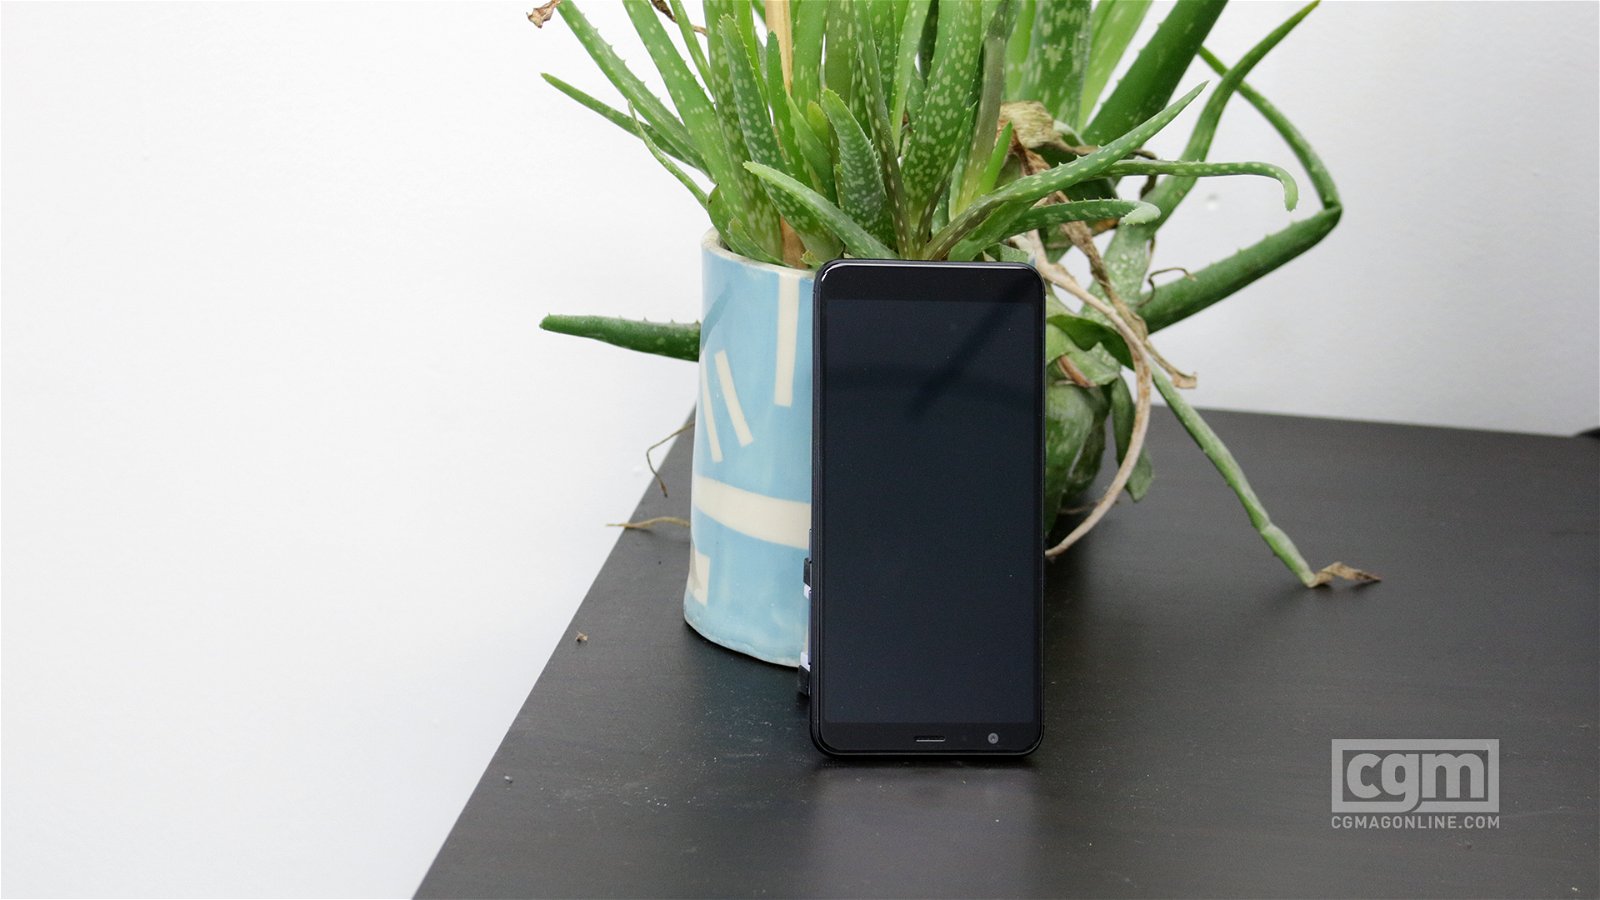 Asus Zenfone Max Plus (Smartphone) Review 2